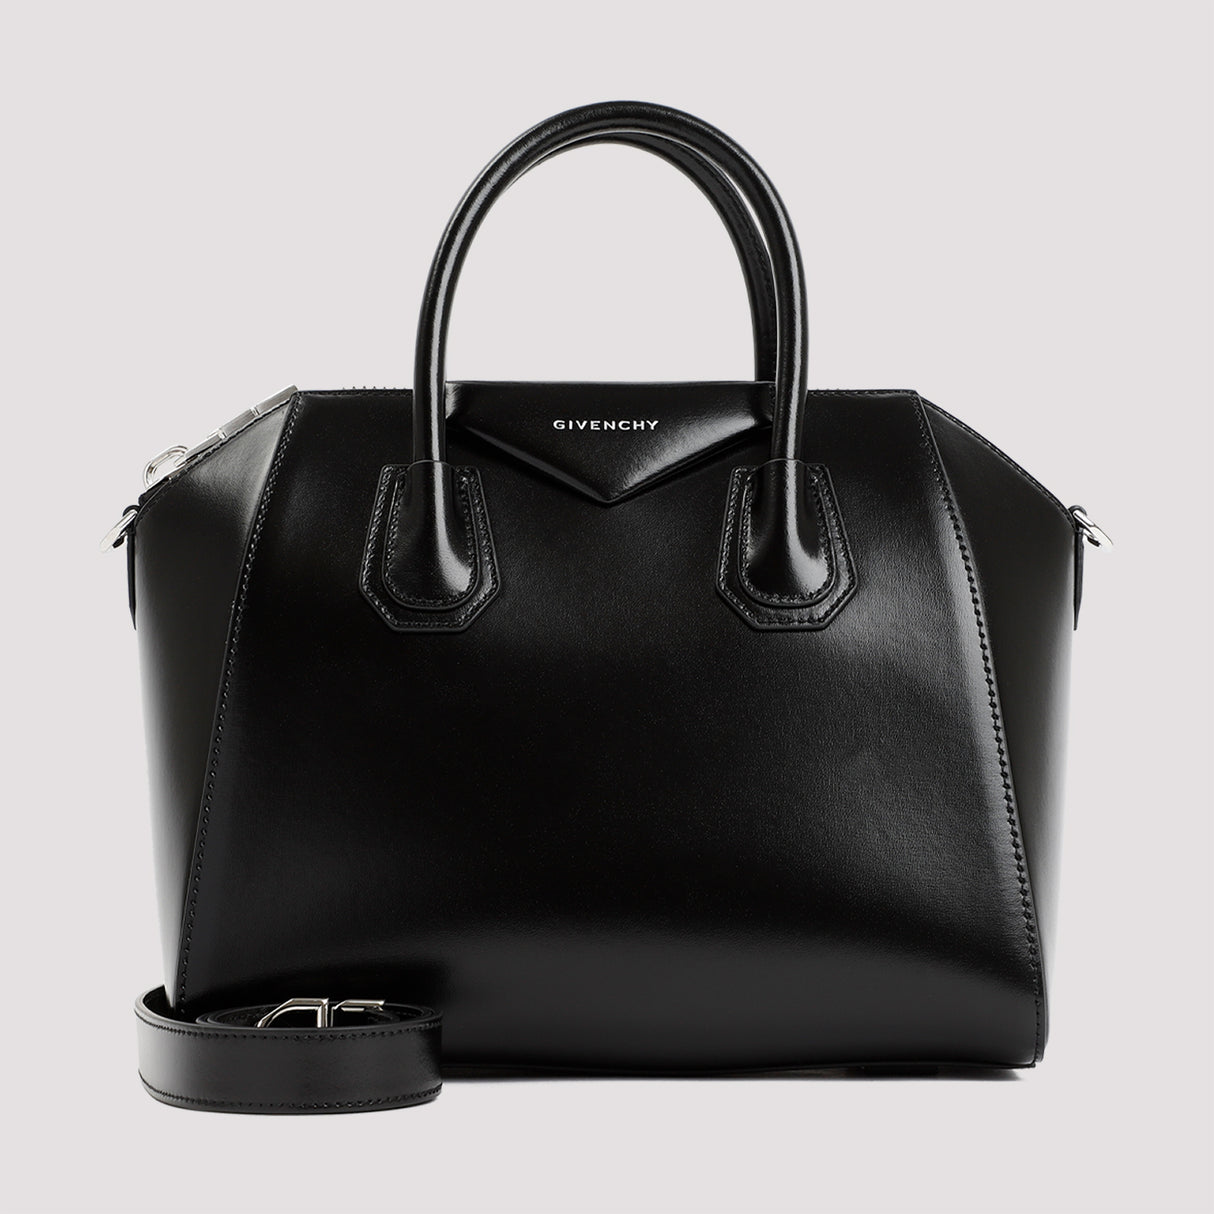 GIVENCHY Black Brushed Calf Leather Antigona Small Handbag, 28cm x 24cm x 16cm